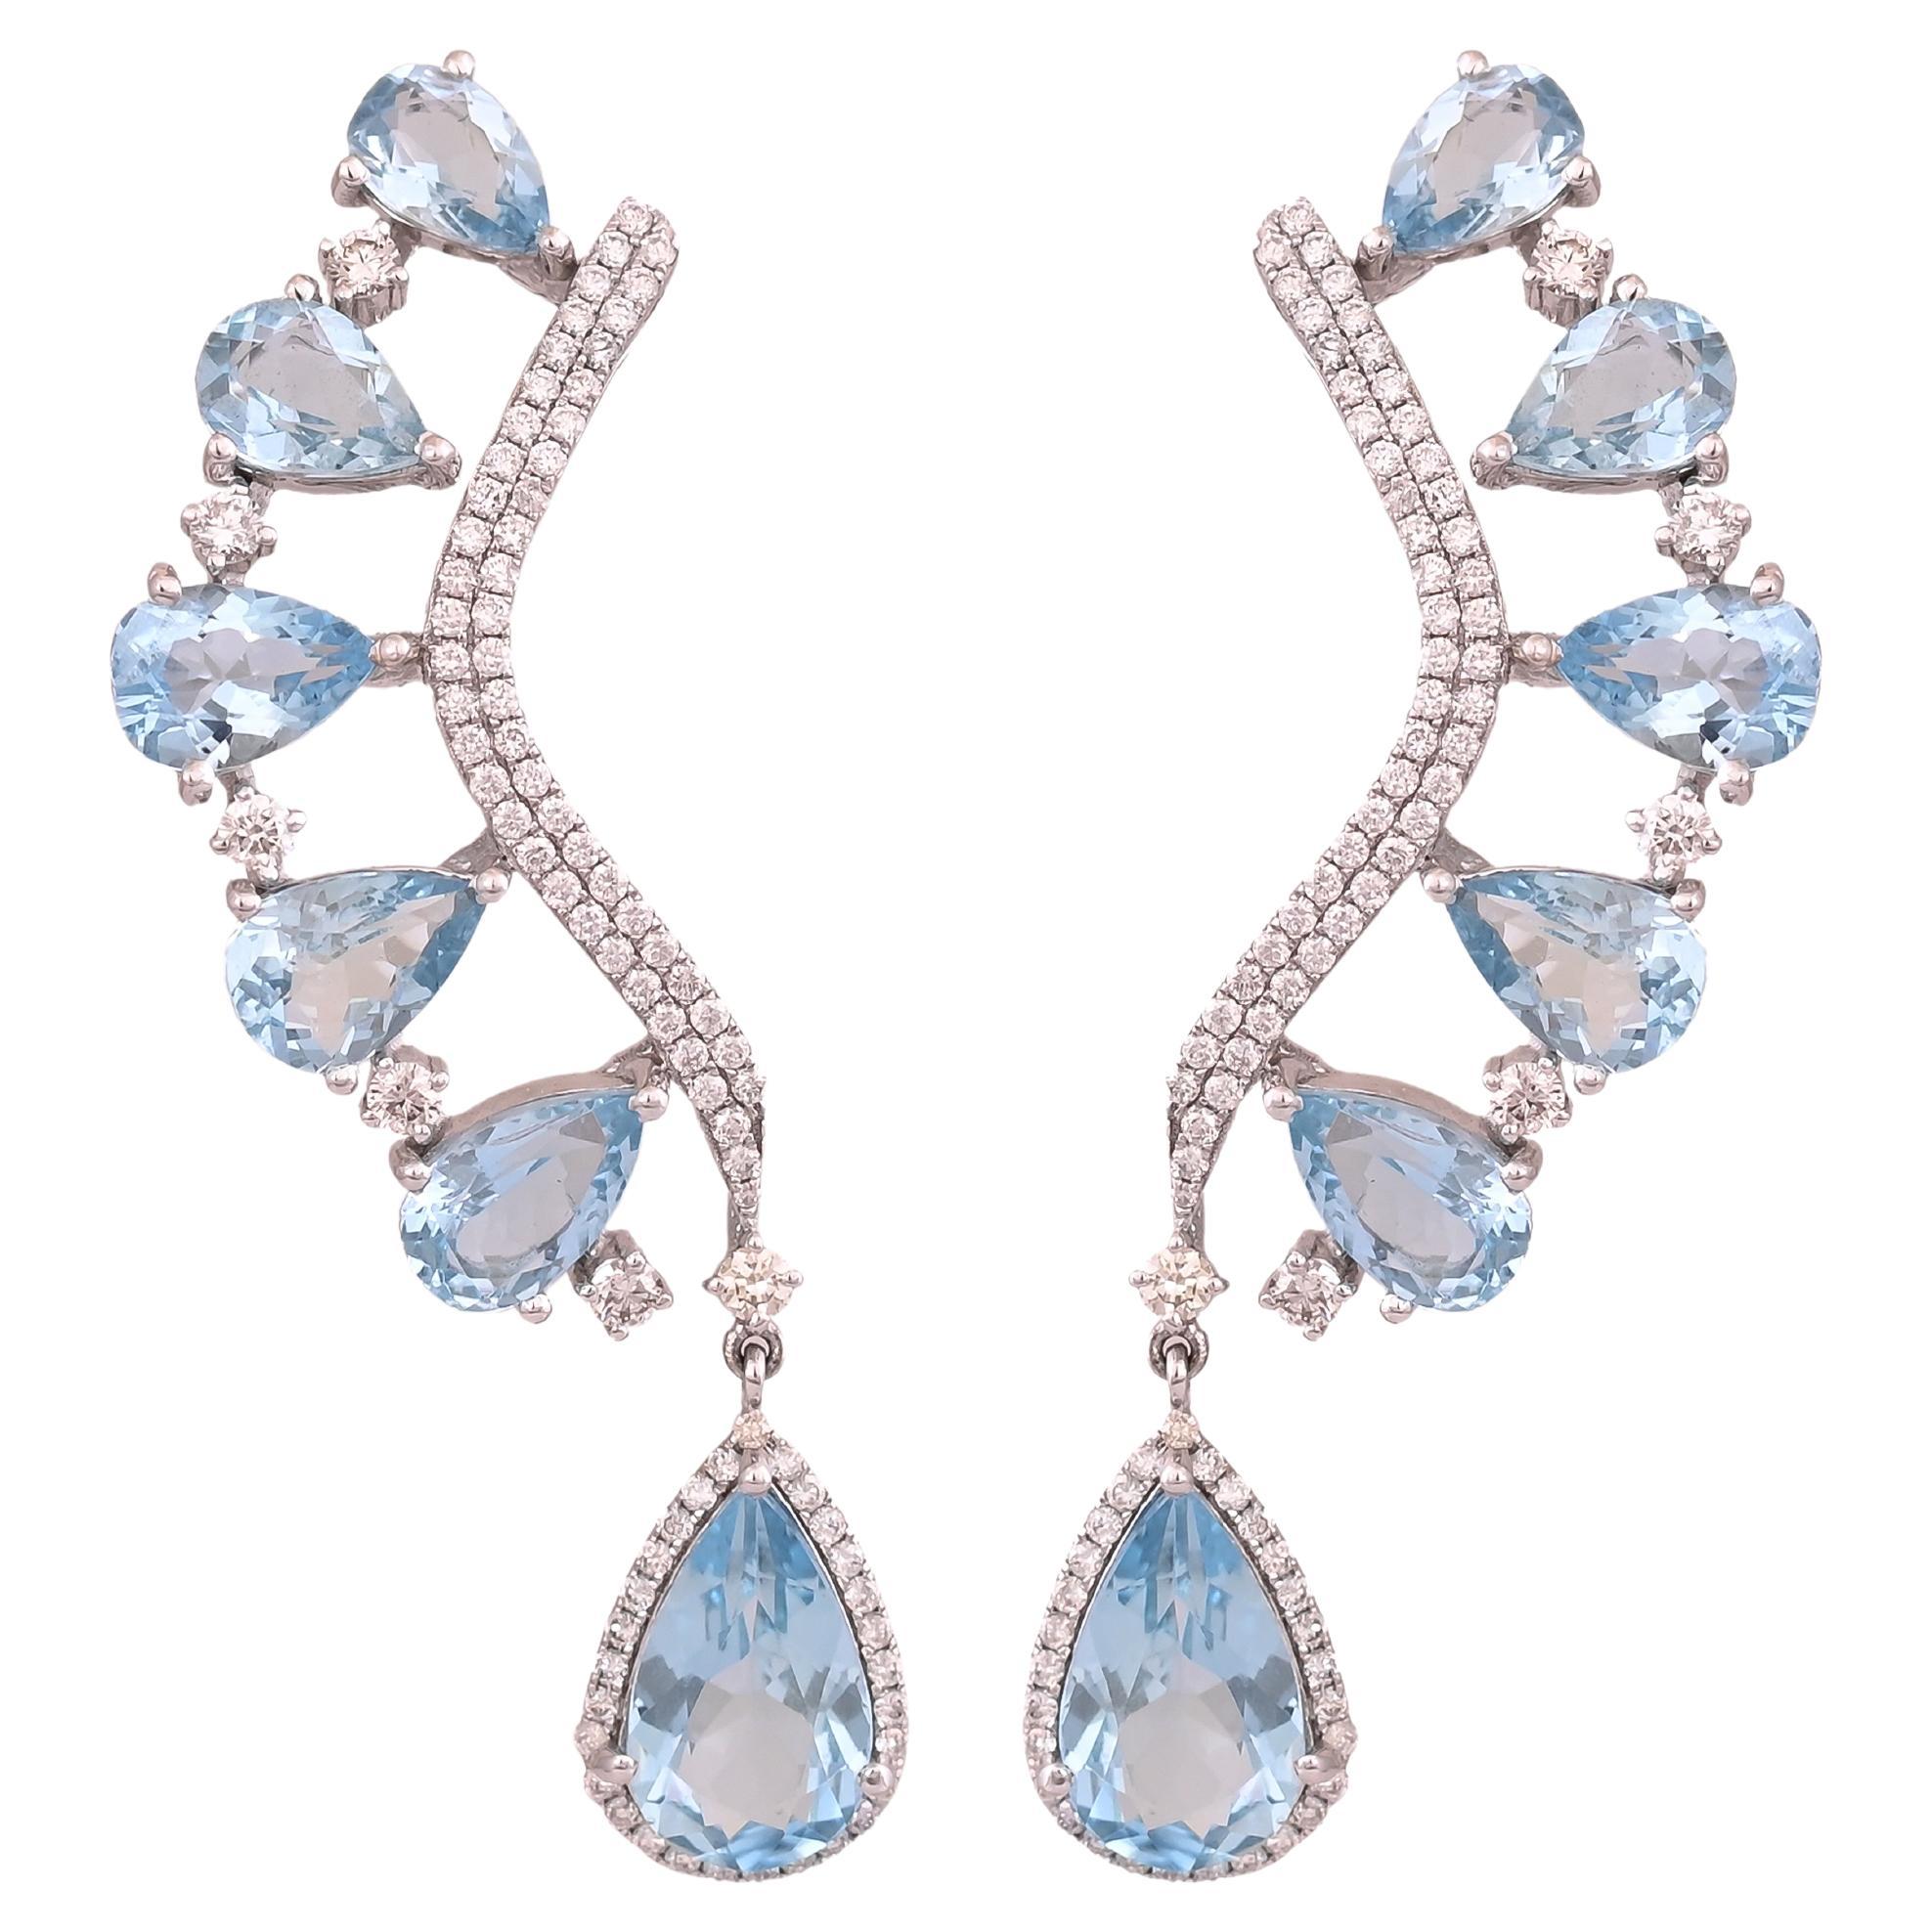 Set in 18K White Gold, 16.63 carats, Aquamarine & Diamonds Chandelier Earrings